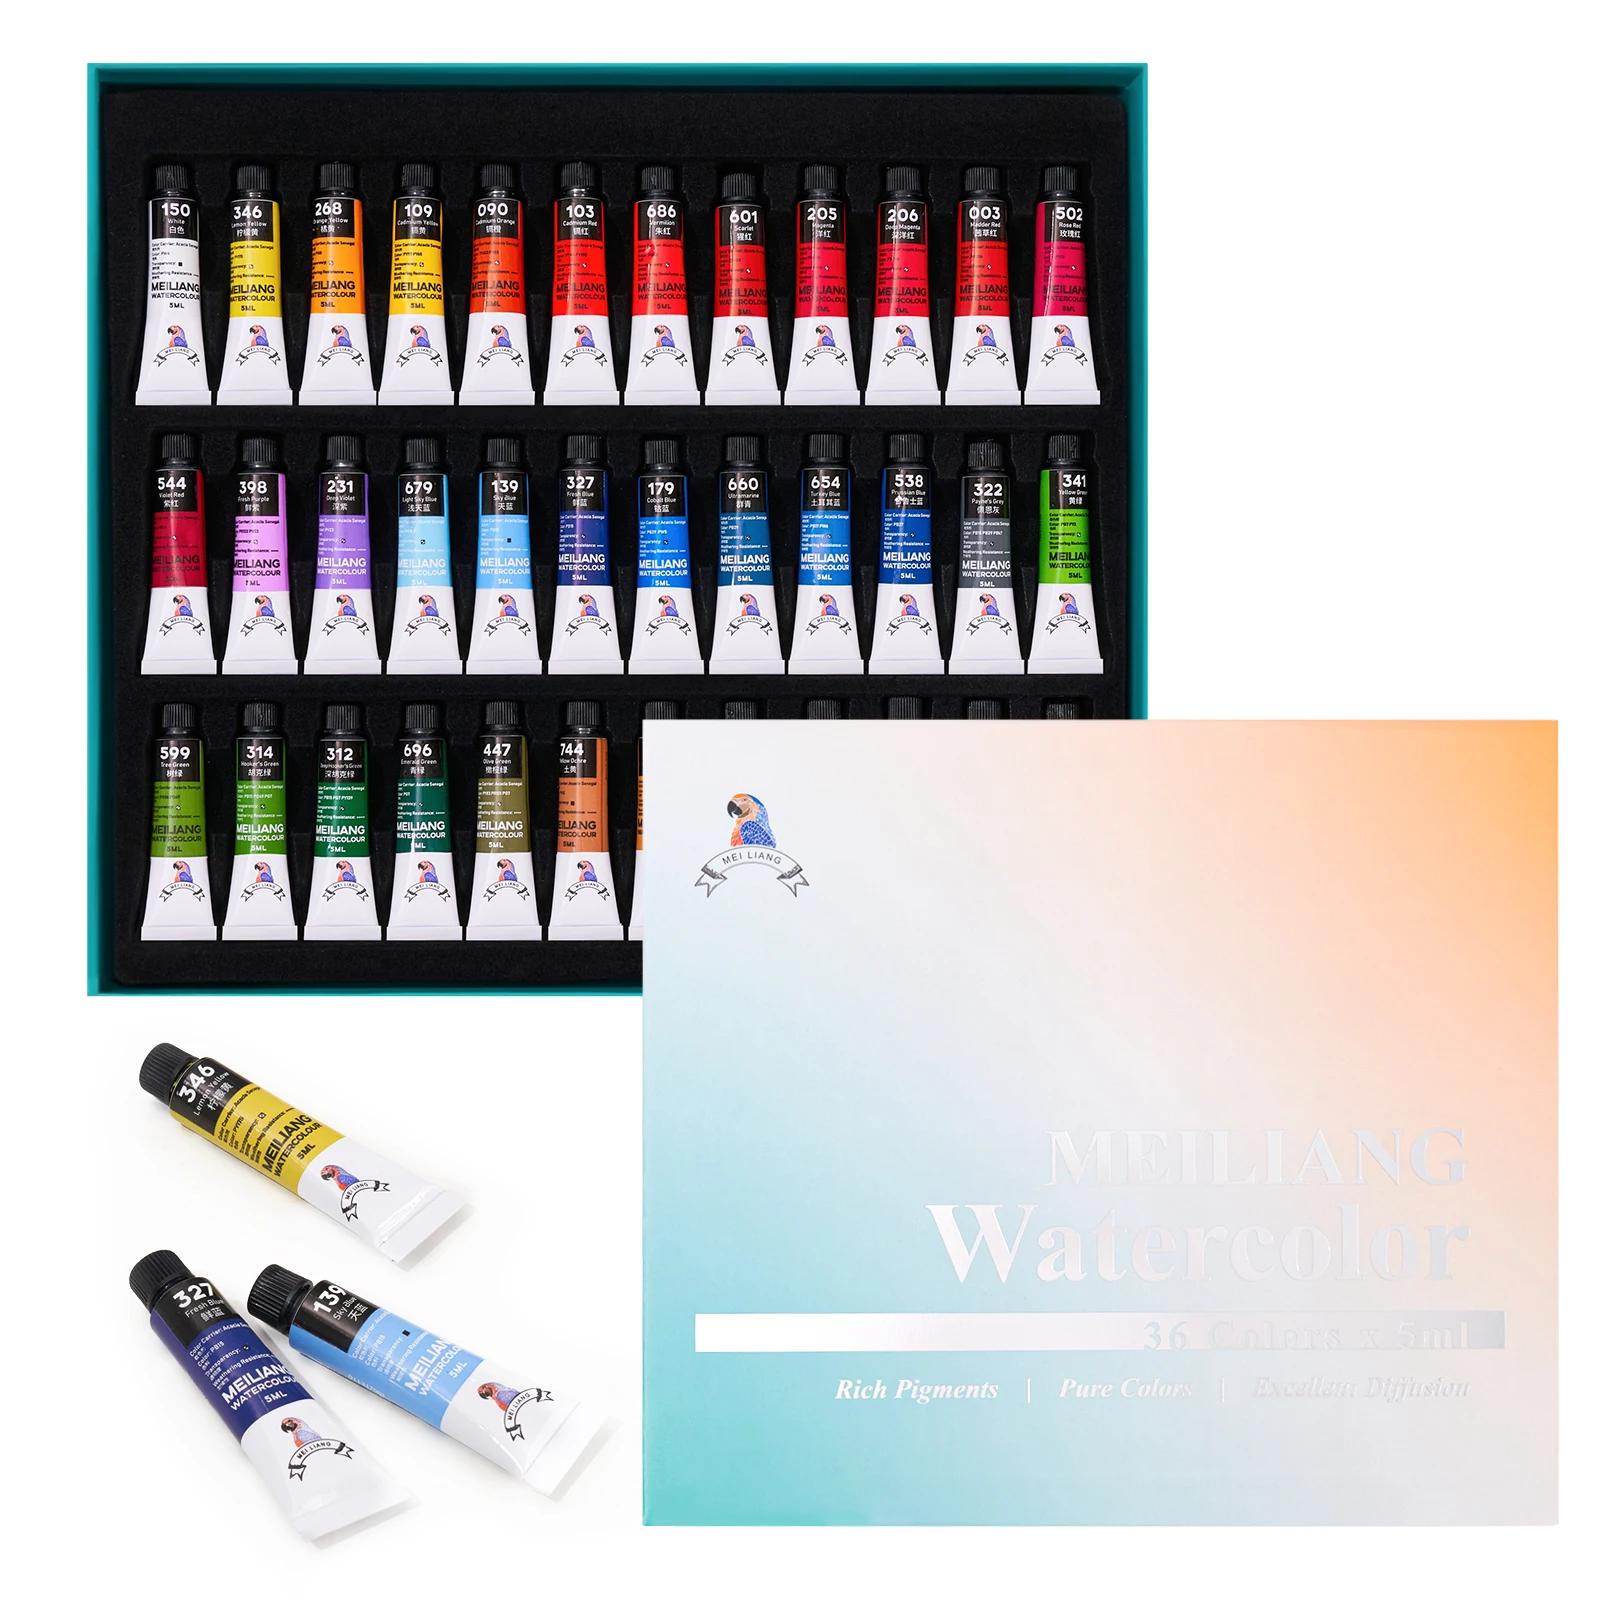 MeiLiang 수채화 페인트 세트, 플로즈 튜브, 아티스트 및 초보자를 위한 수채화 튜브 아트 용품, 36 가지 생생한 색상, 5ml / 0.17